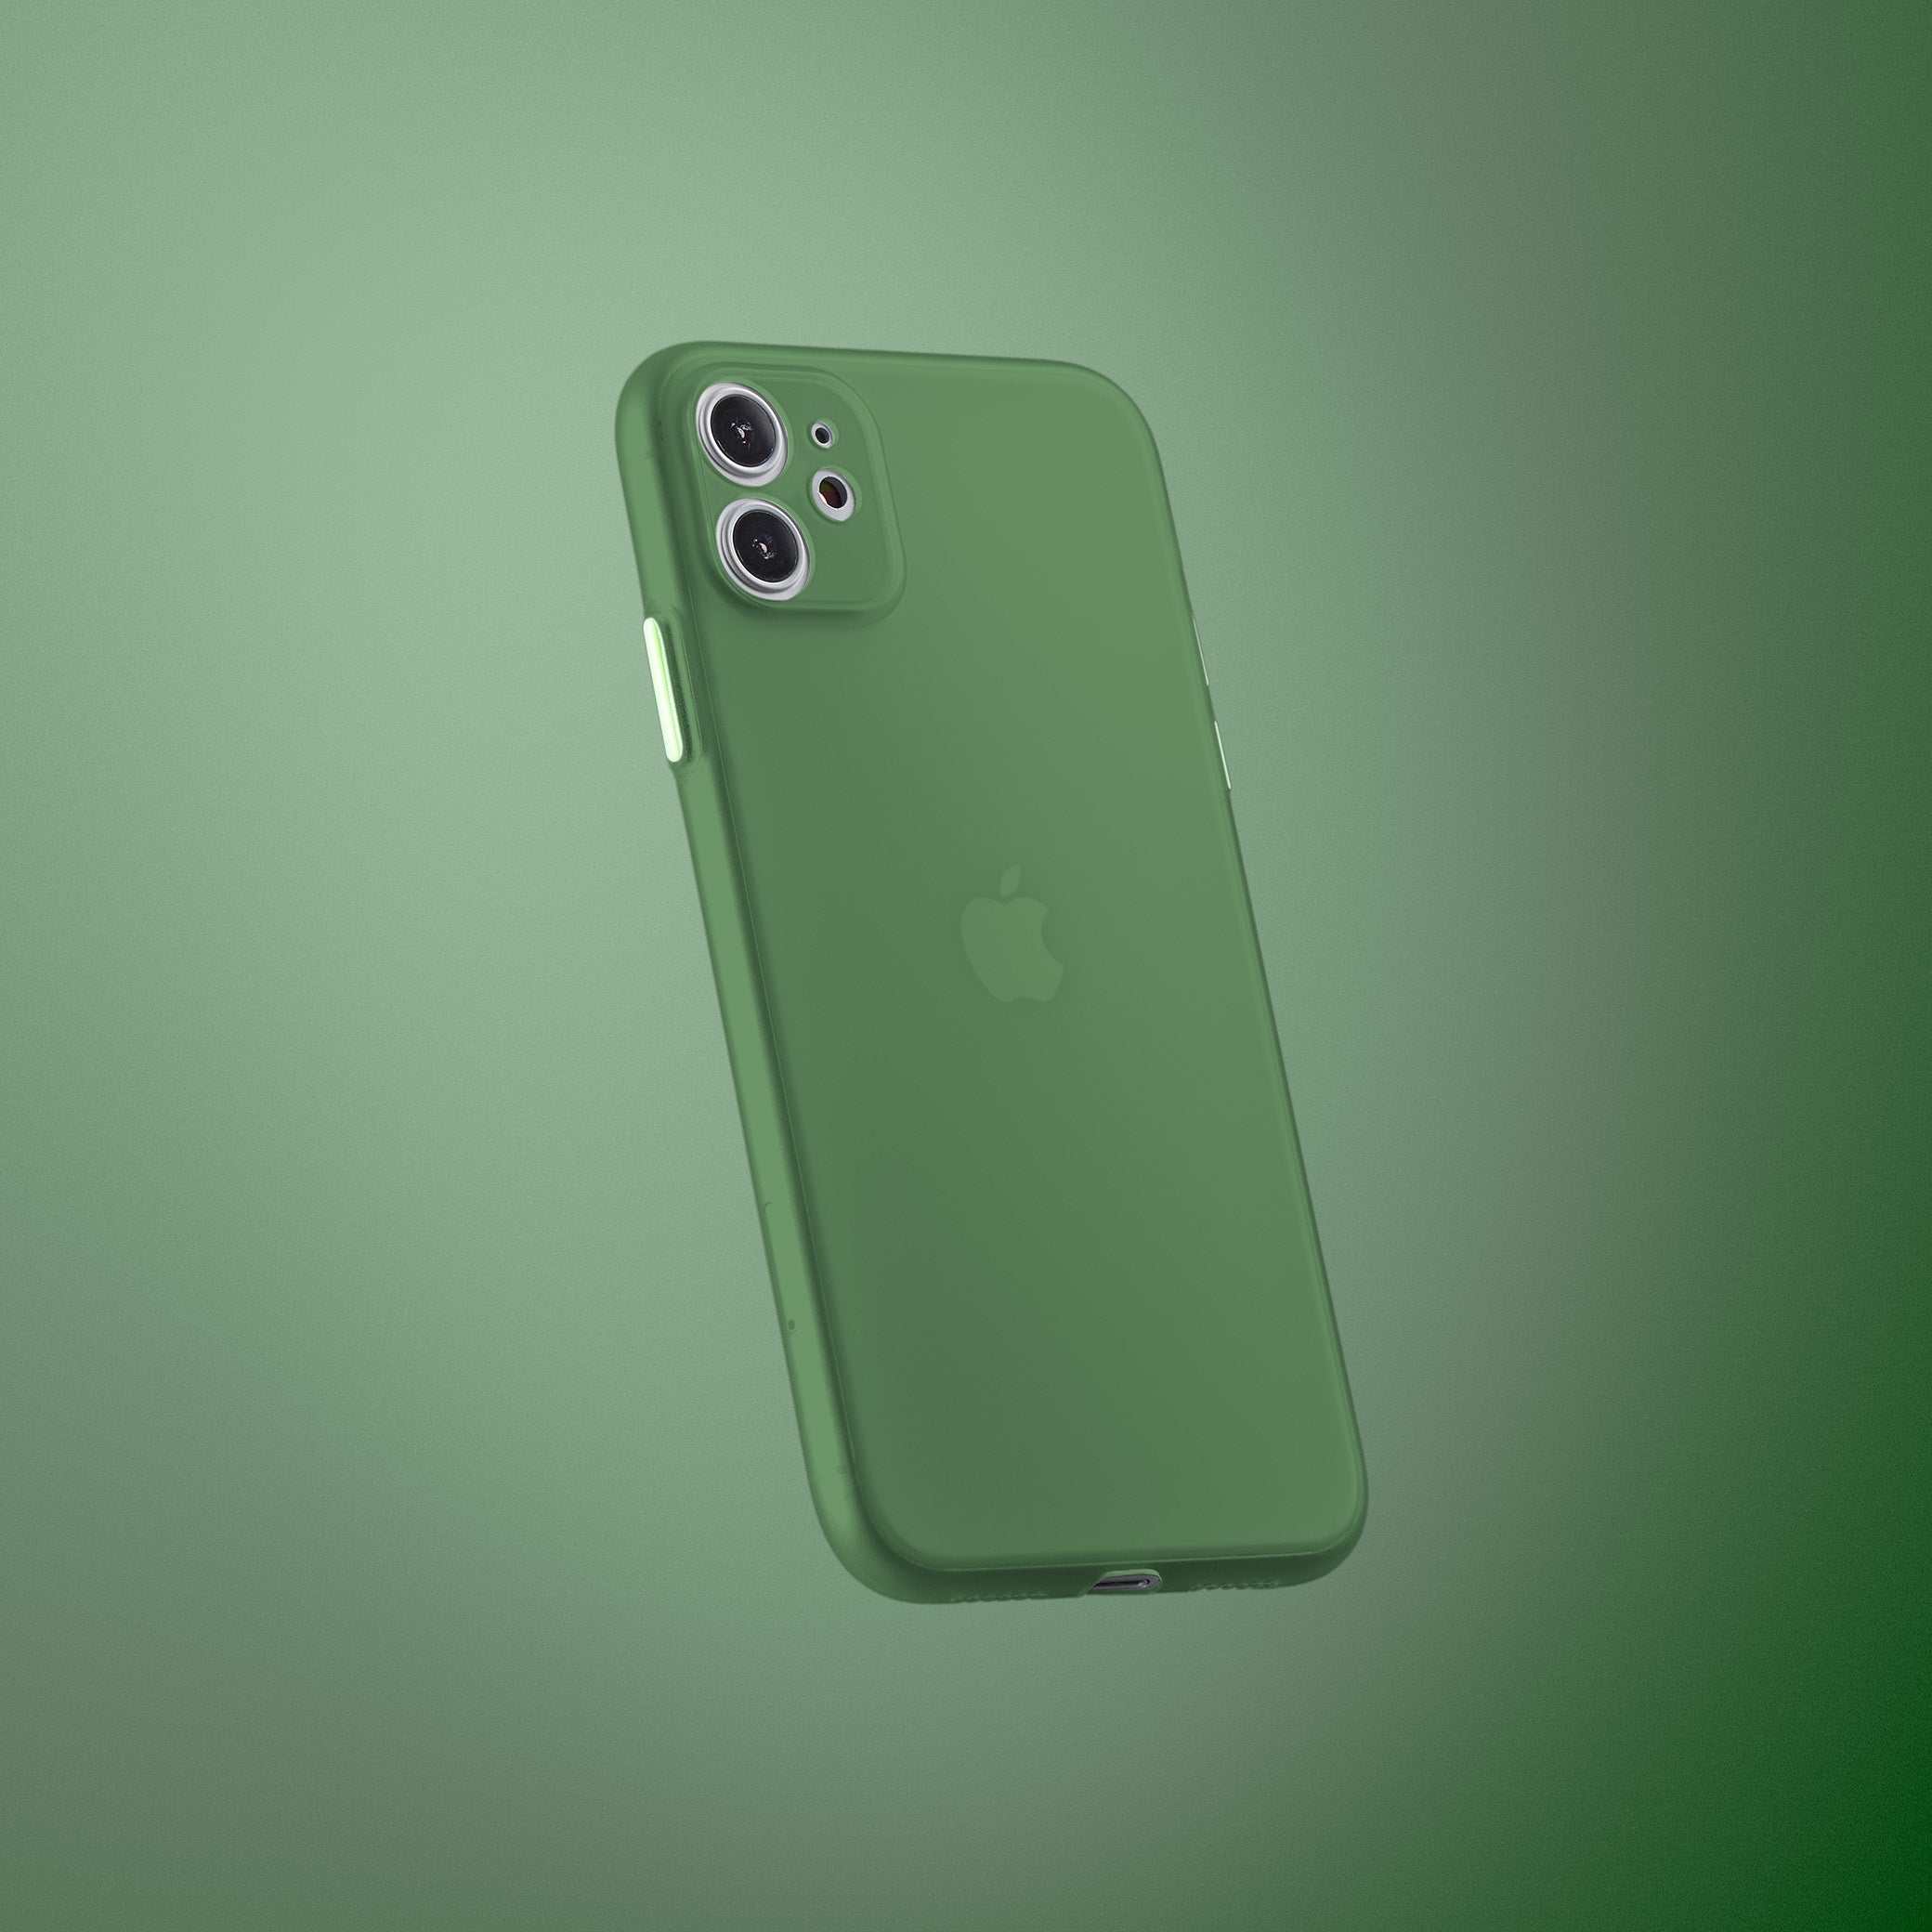 Super Slim Case 2.0 for iPhone 11 - Avacado Green